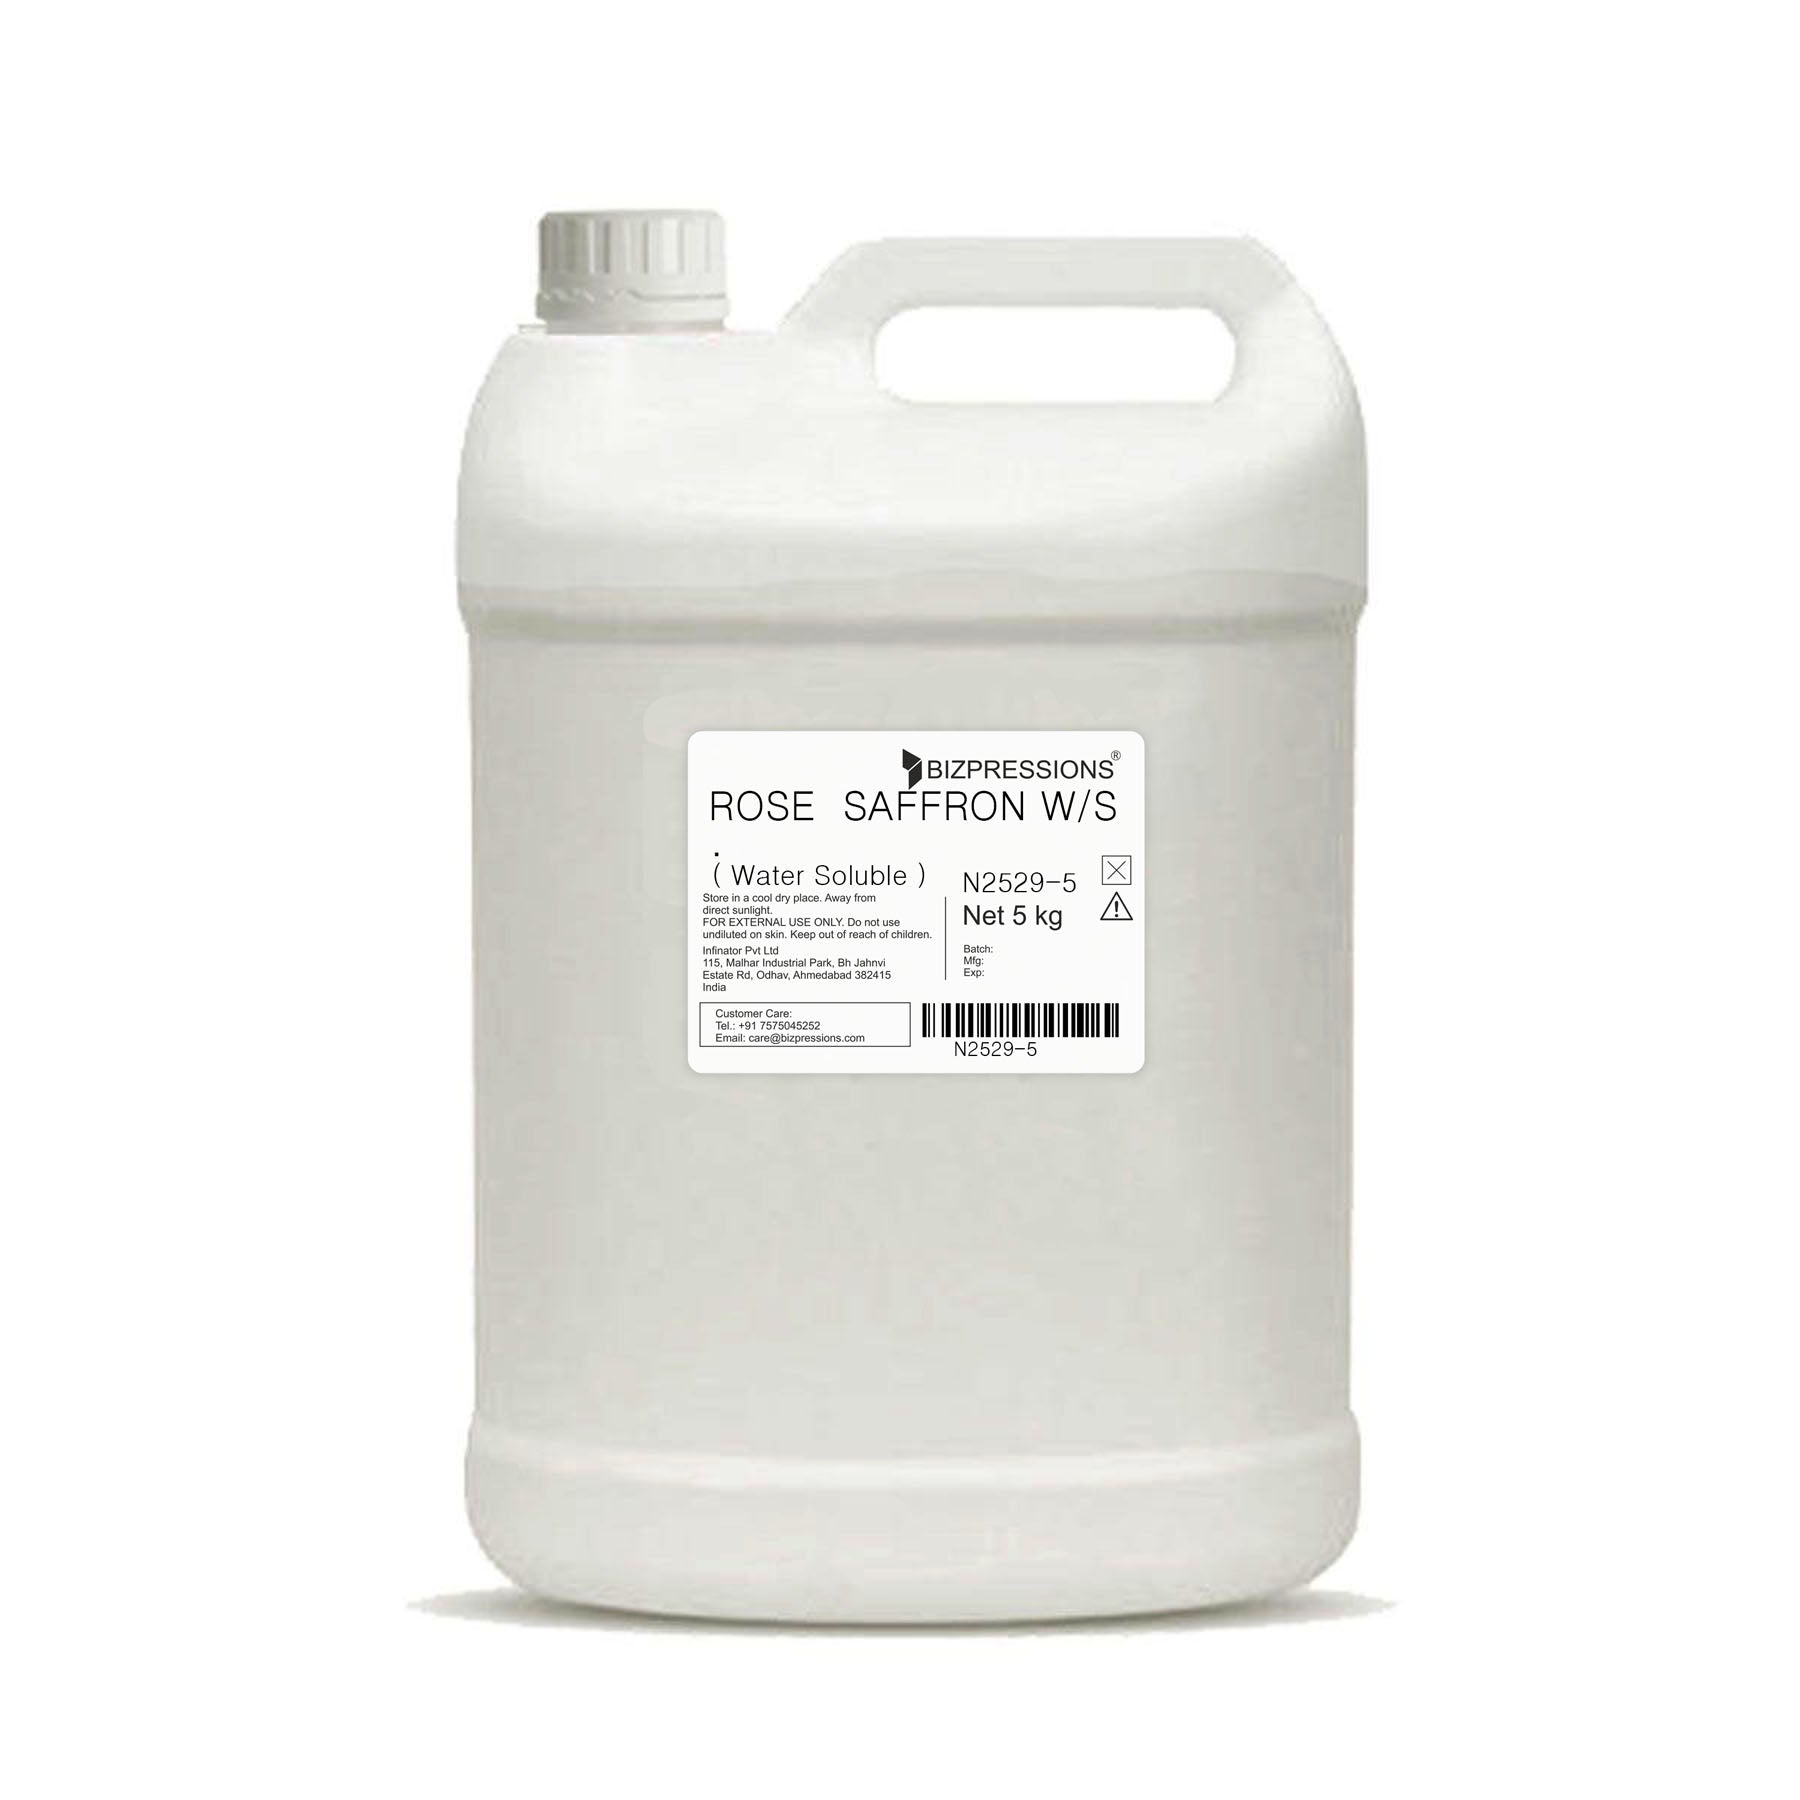 ROSE SAFFRON W/S - Fragrance ( Water Soluble ) - 5 kg